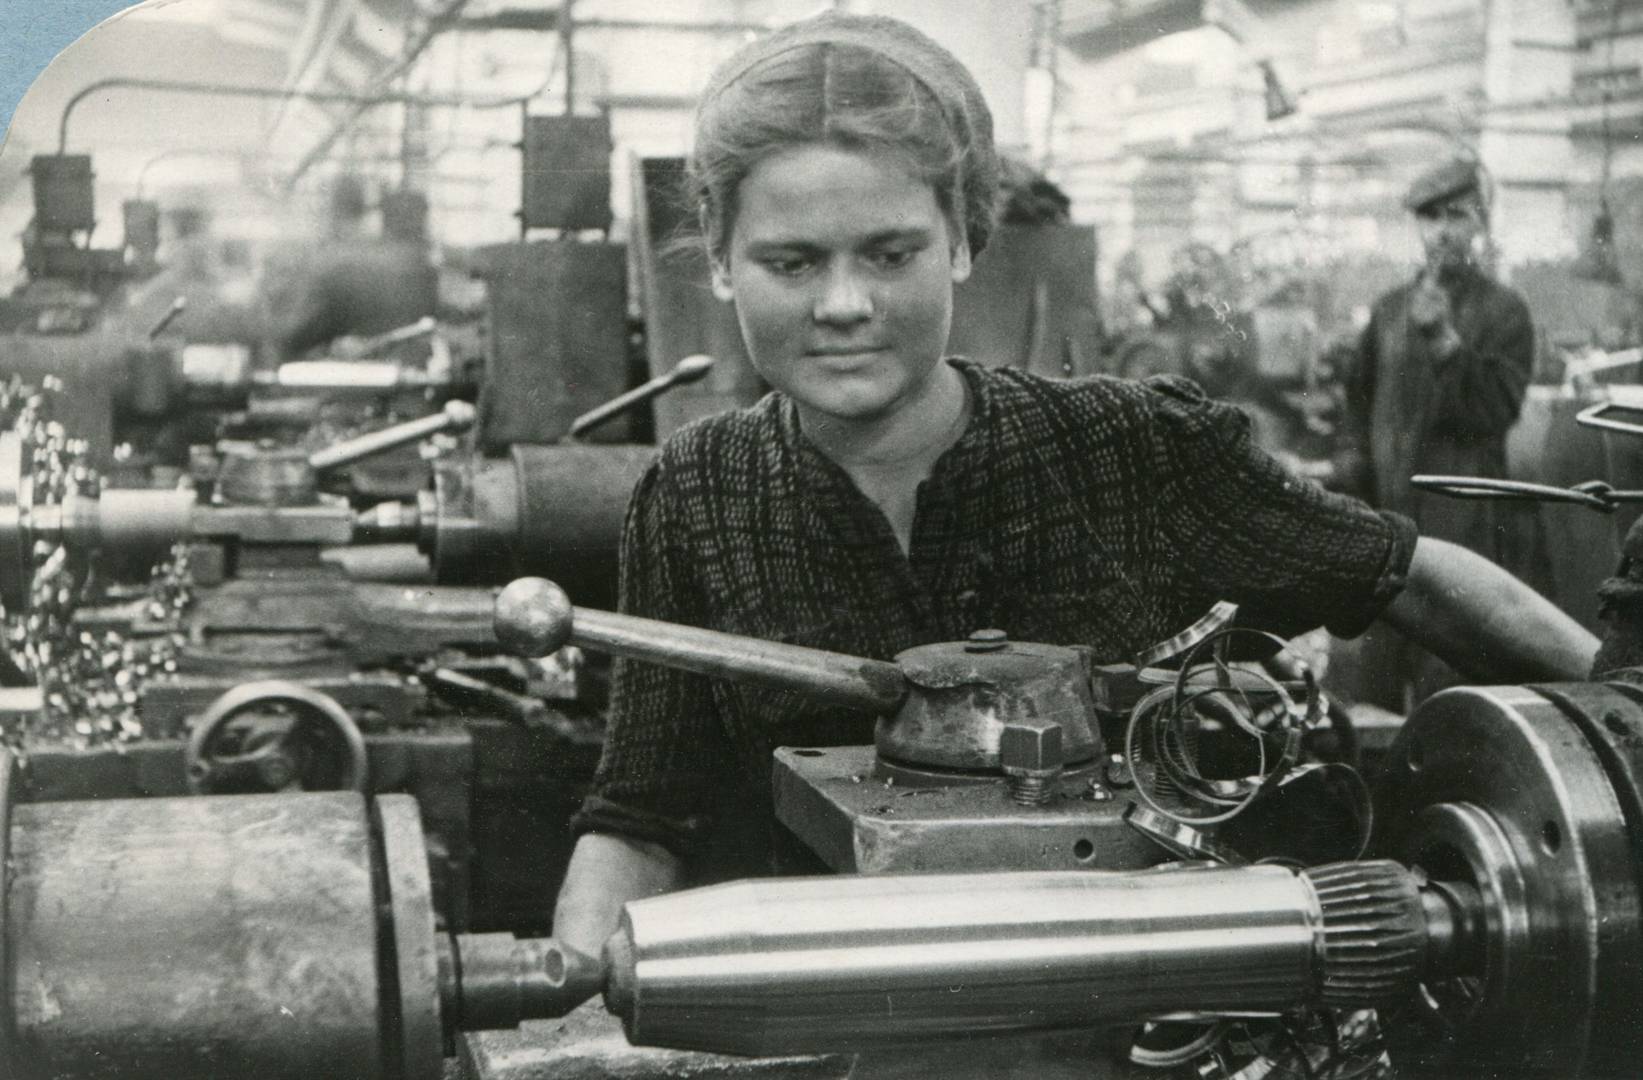 Производство боеприпасов, 1945 год